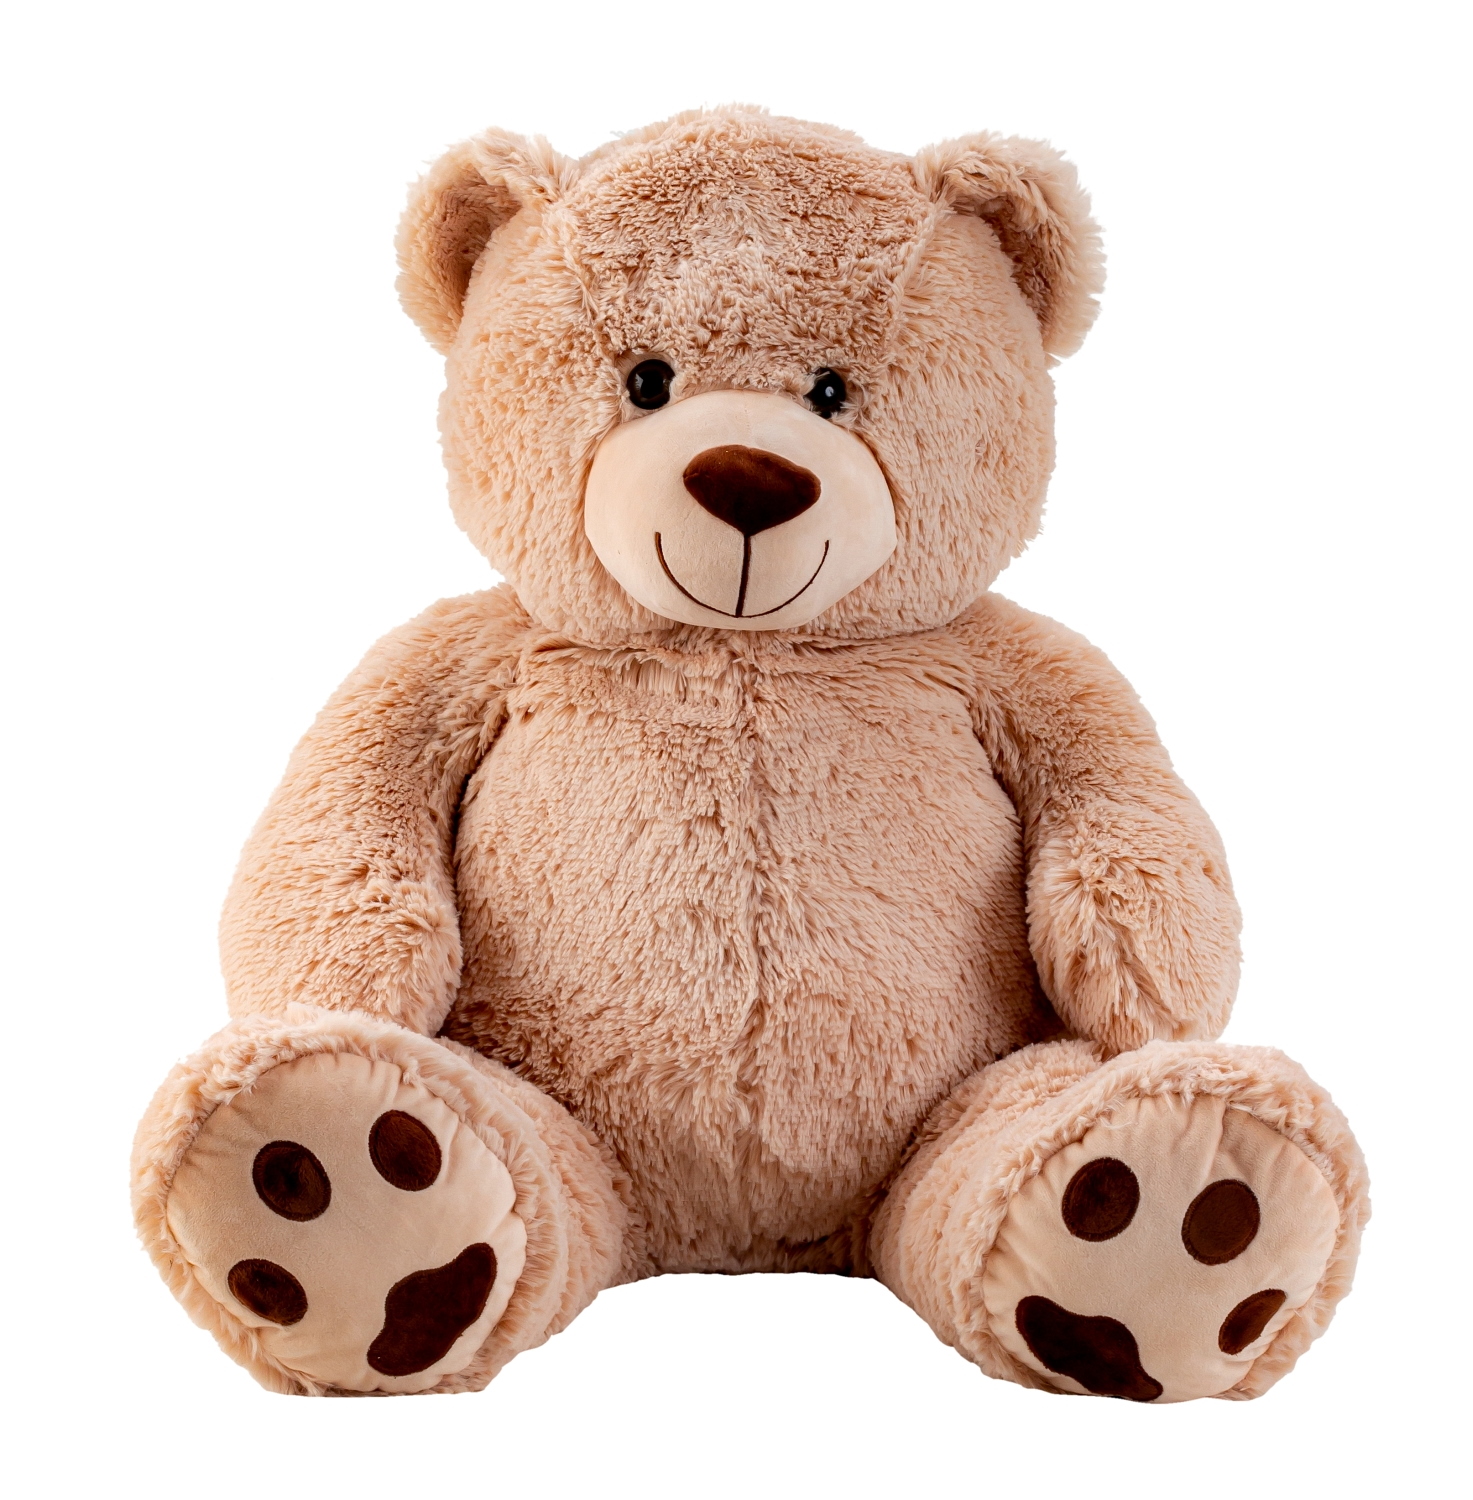 Teddybär Blau 50 cm groß mit Schleife Kuscheltier Teddy Kuschelbär Bär 